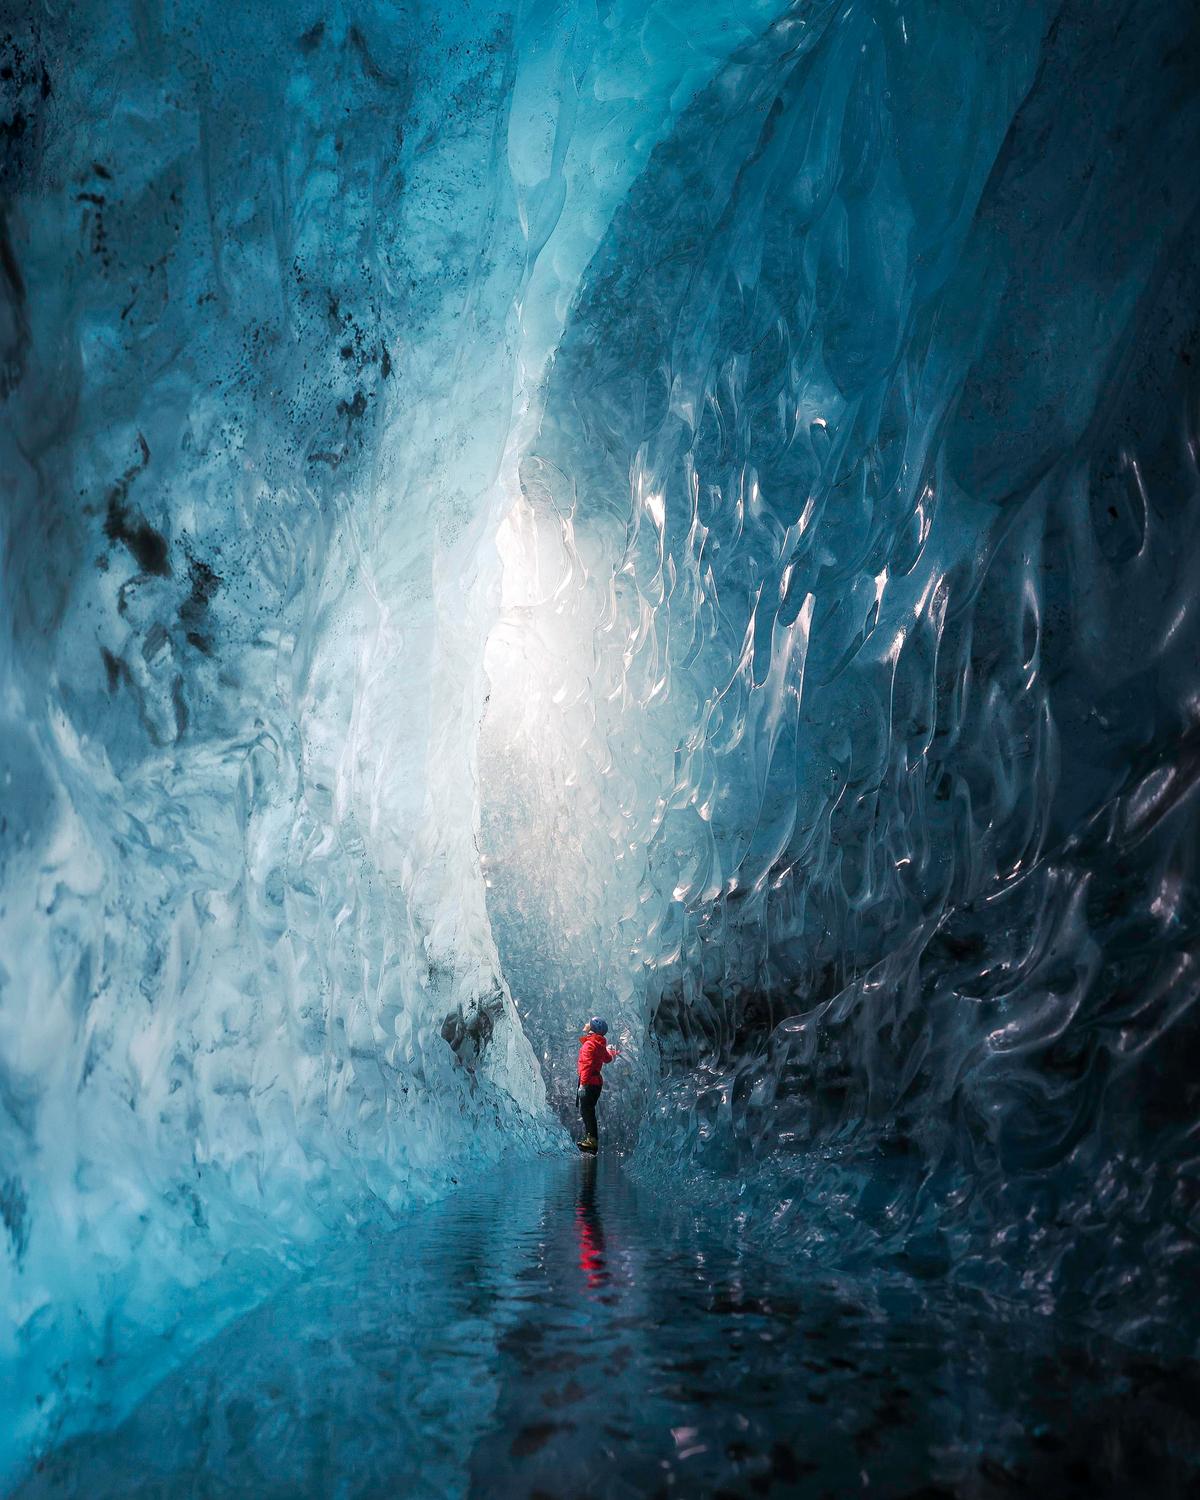 "The crystal crevasse". (Courtesy of <a href="https://www.instagram.com/thestrawhatbackpacker/">Ryan Newburn</a>)